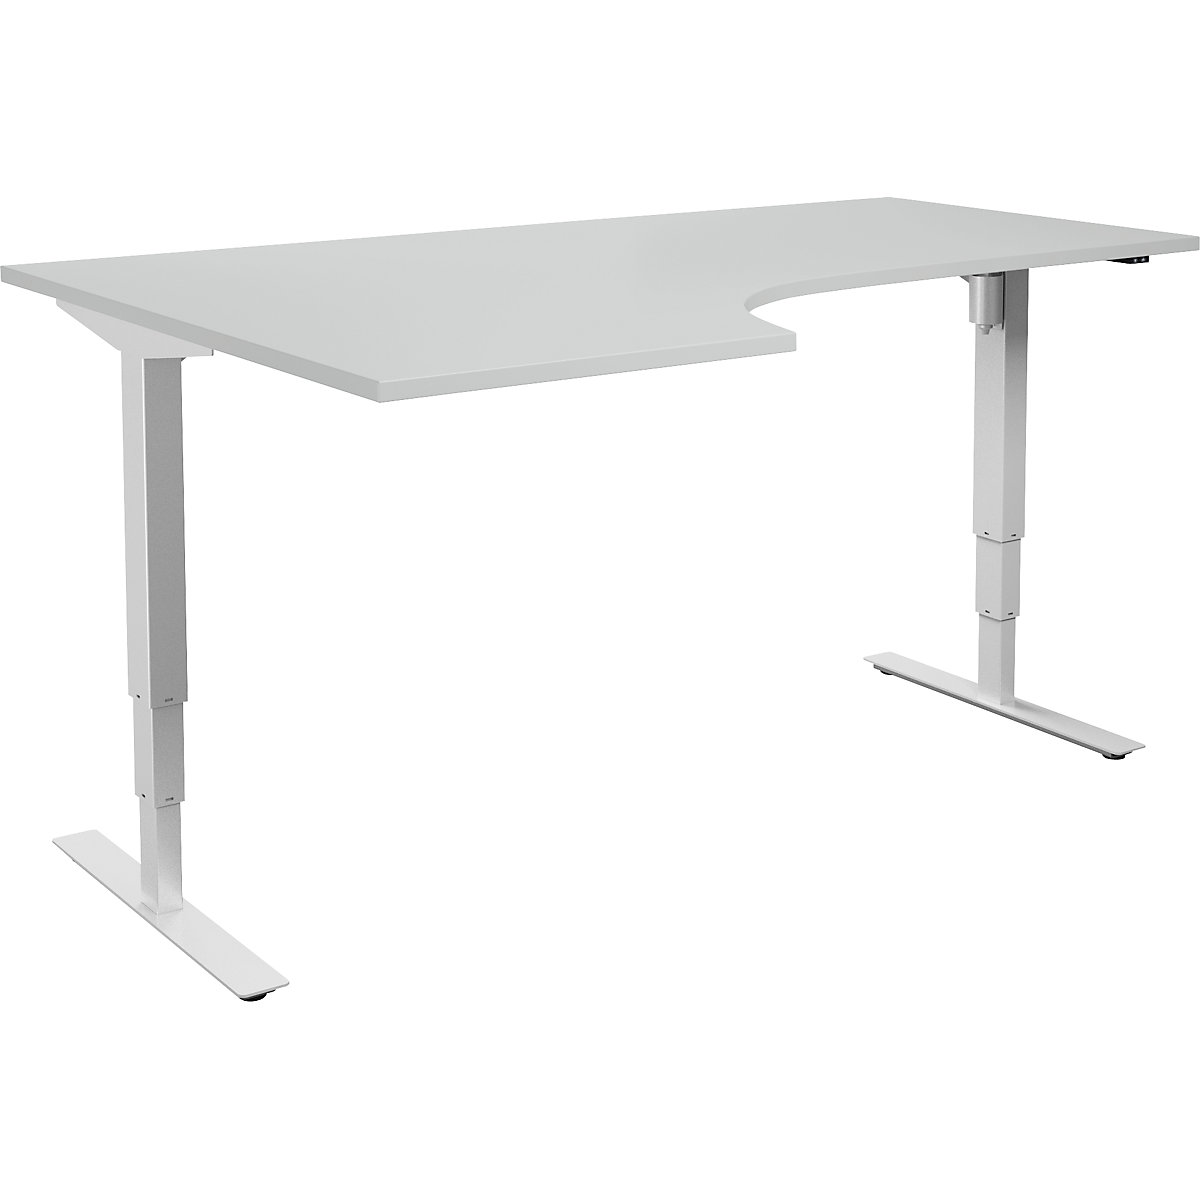 Atlanta corner desk, electrically height adjustable